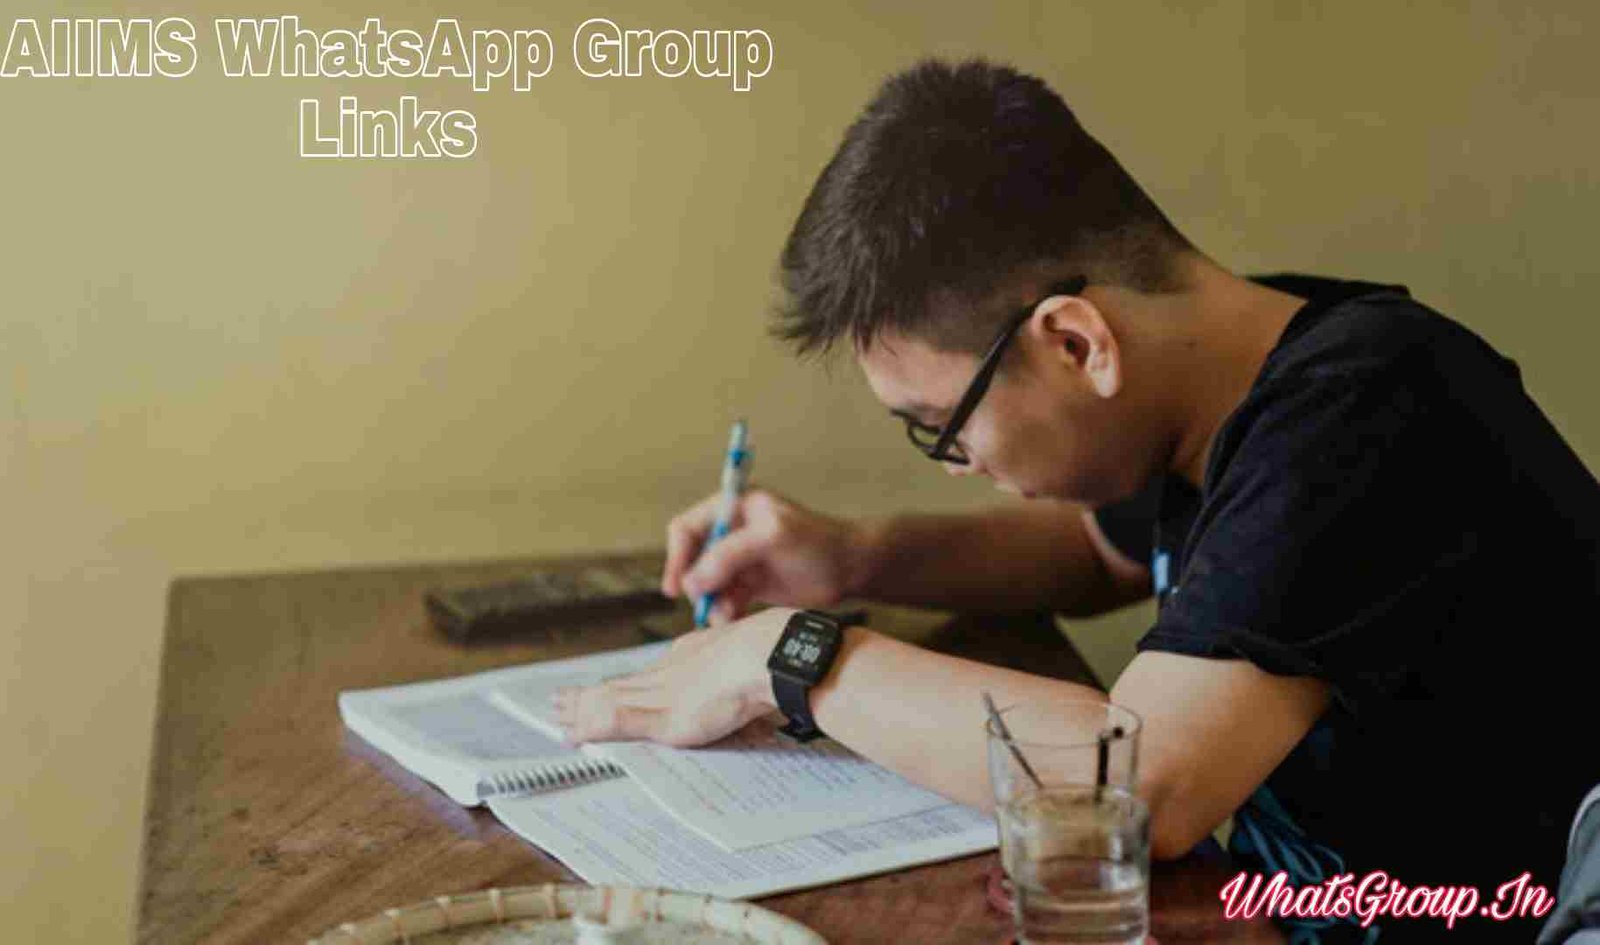 AIIMS WhatsApp Group Links